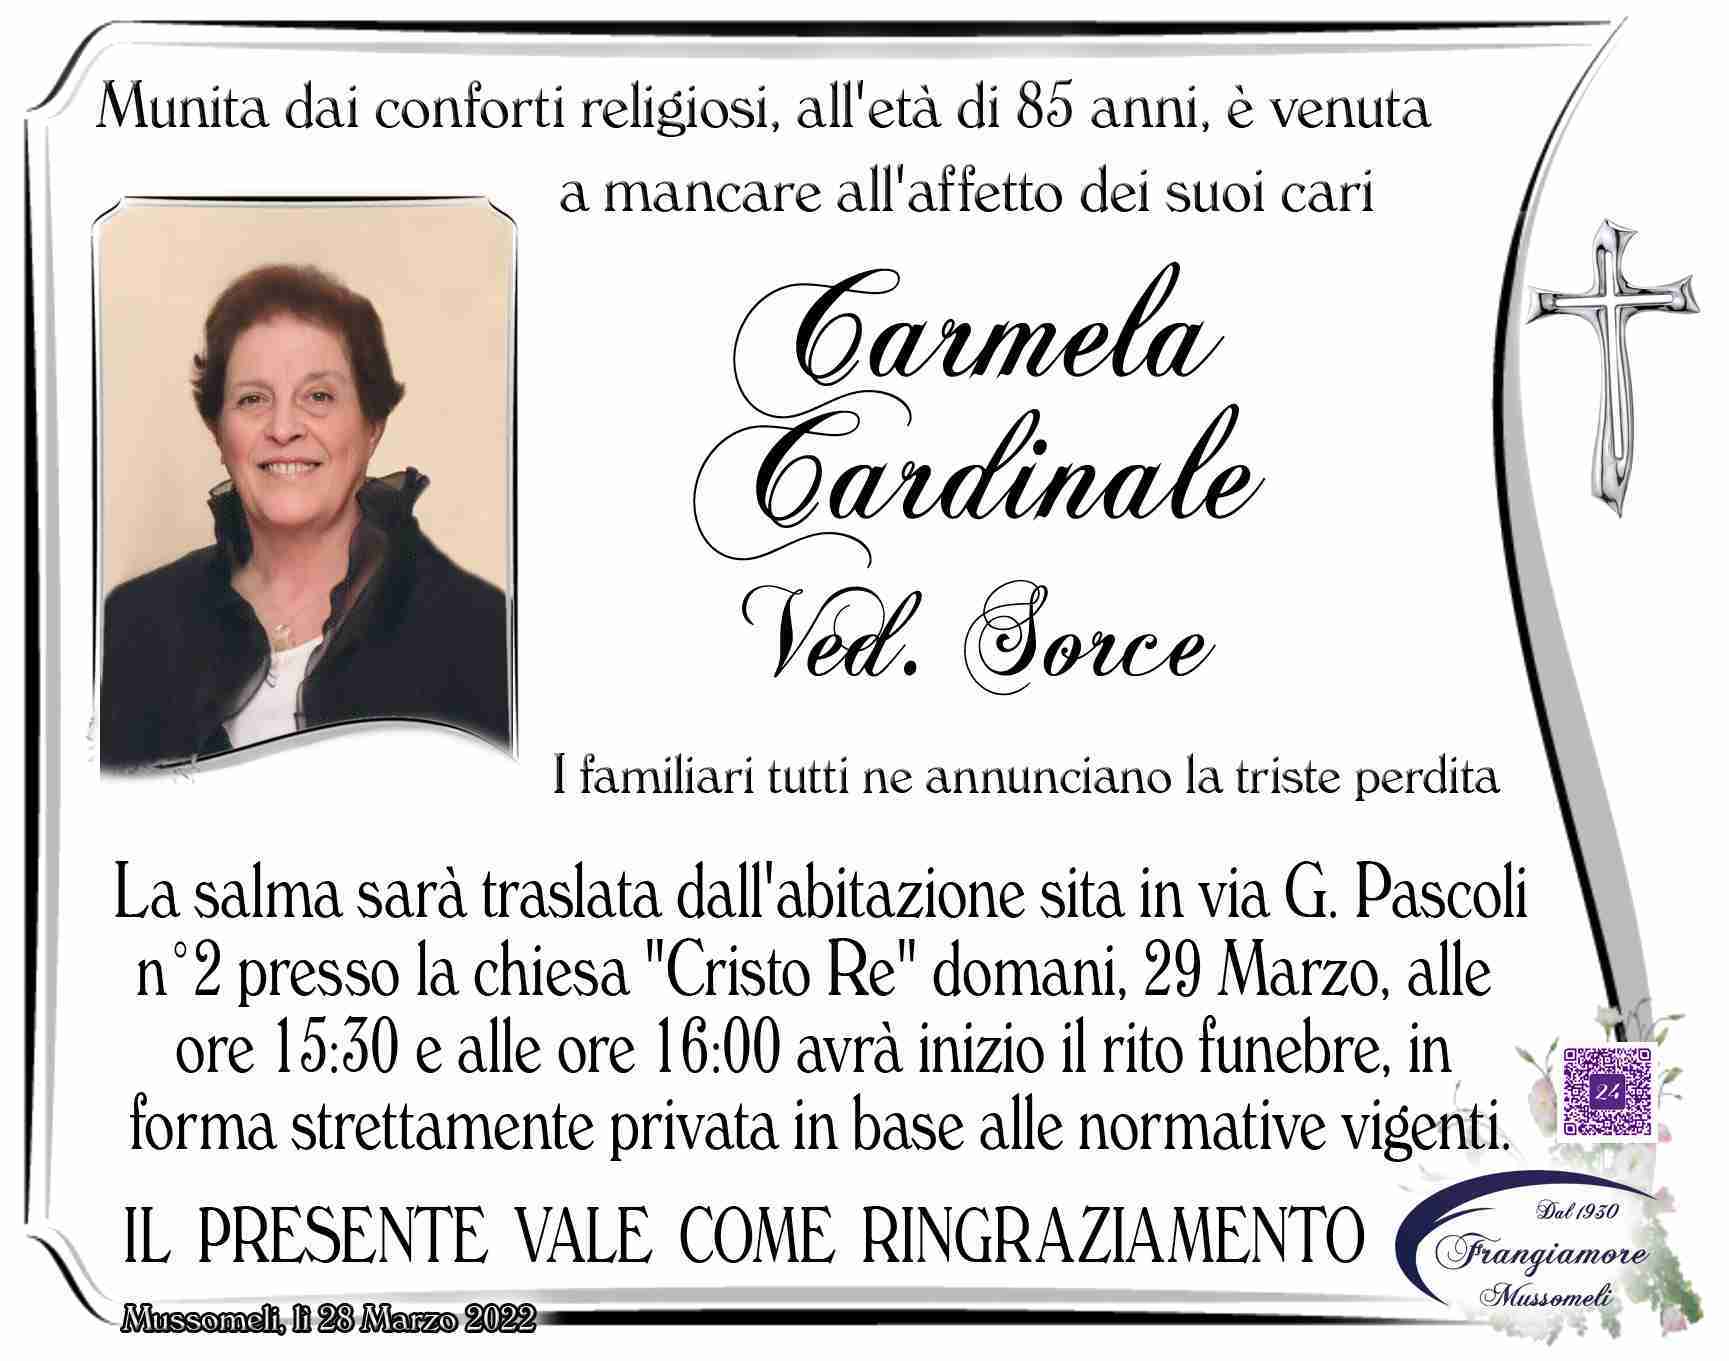 Carmela Cardinale